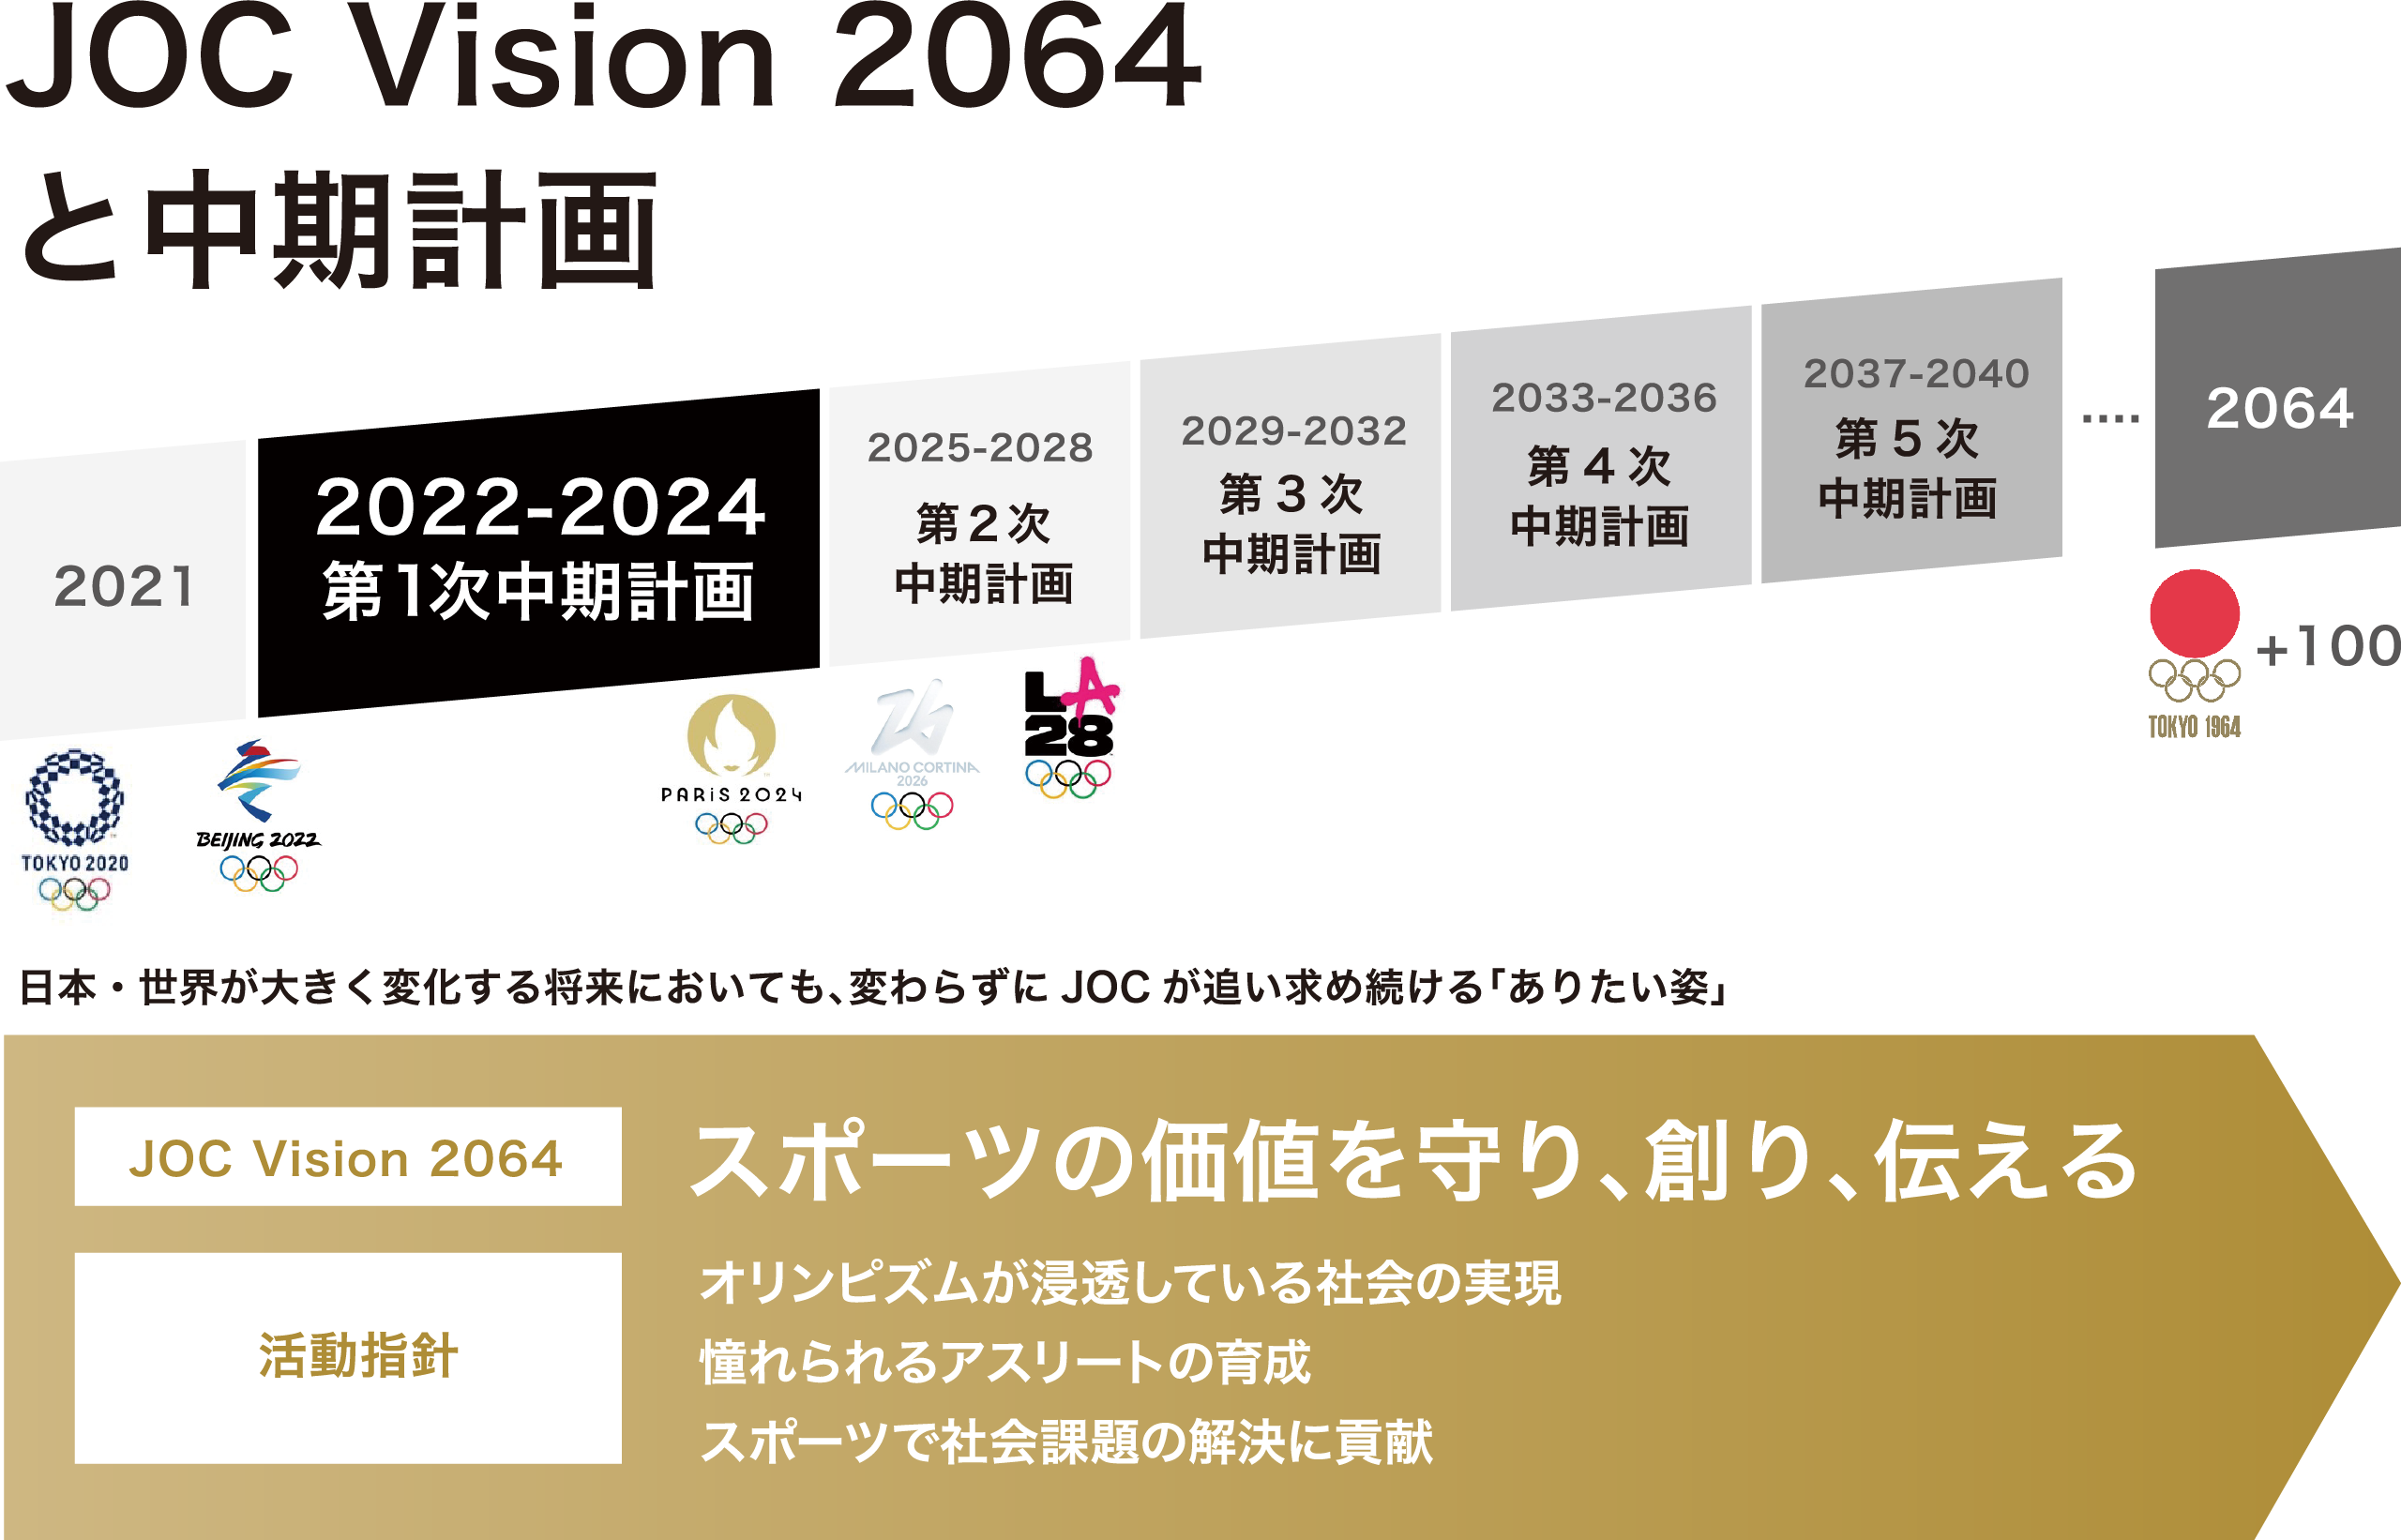 JOC Vision 2064 と 中期計画